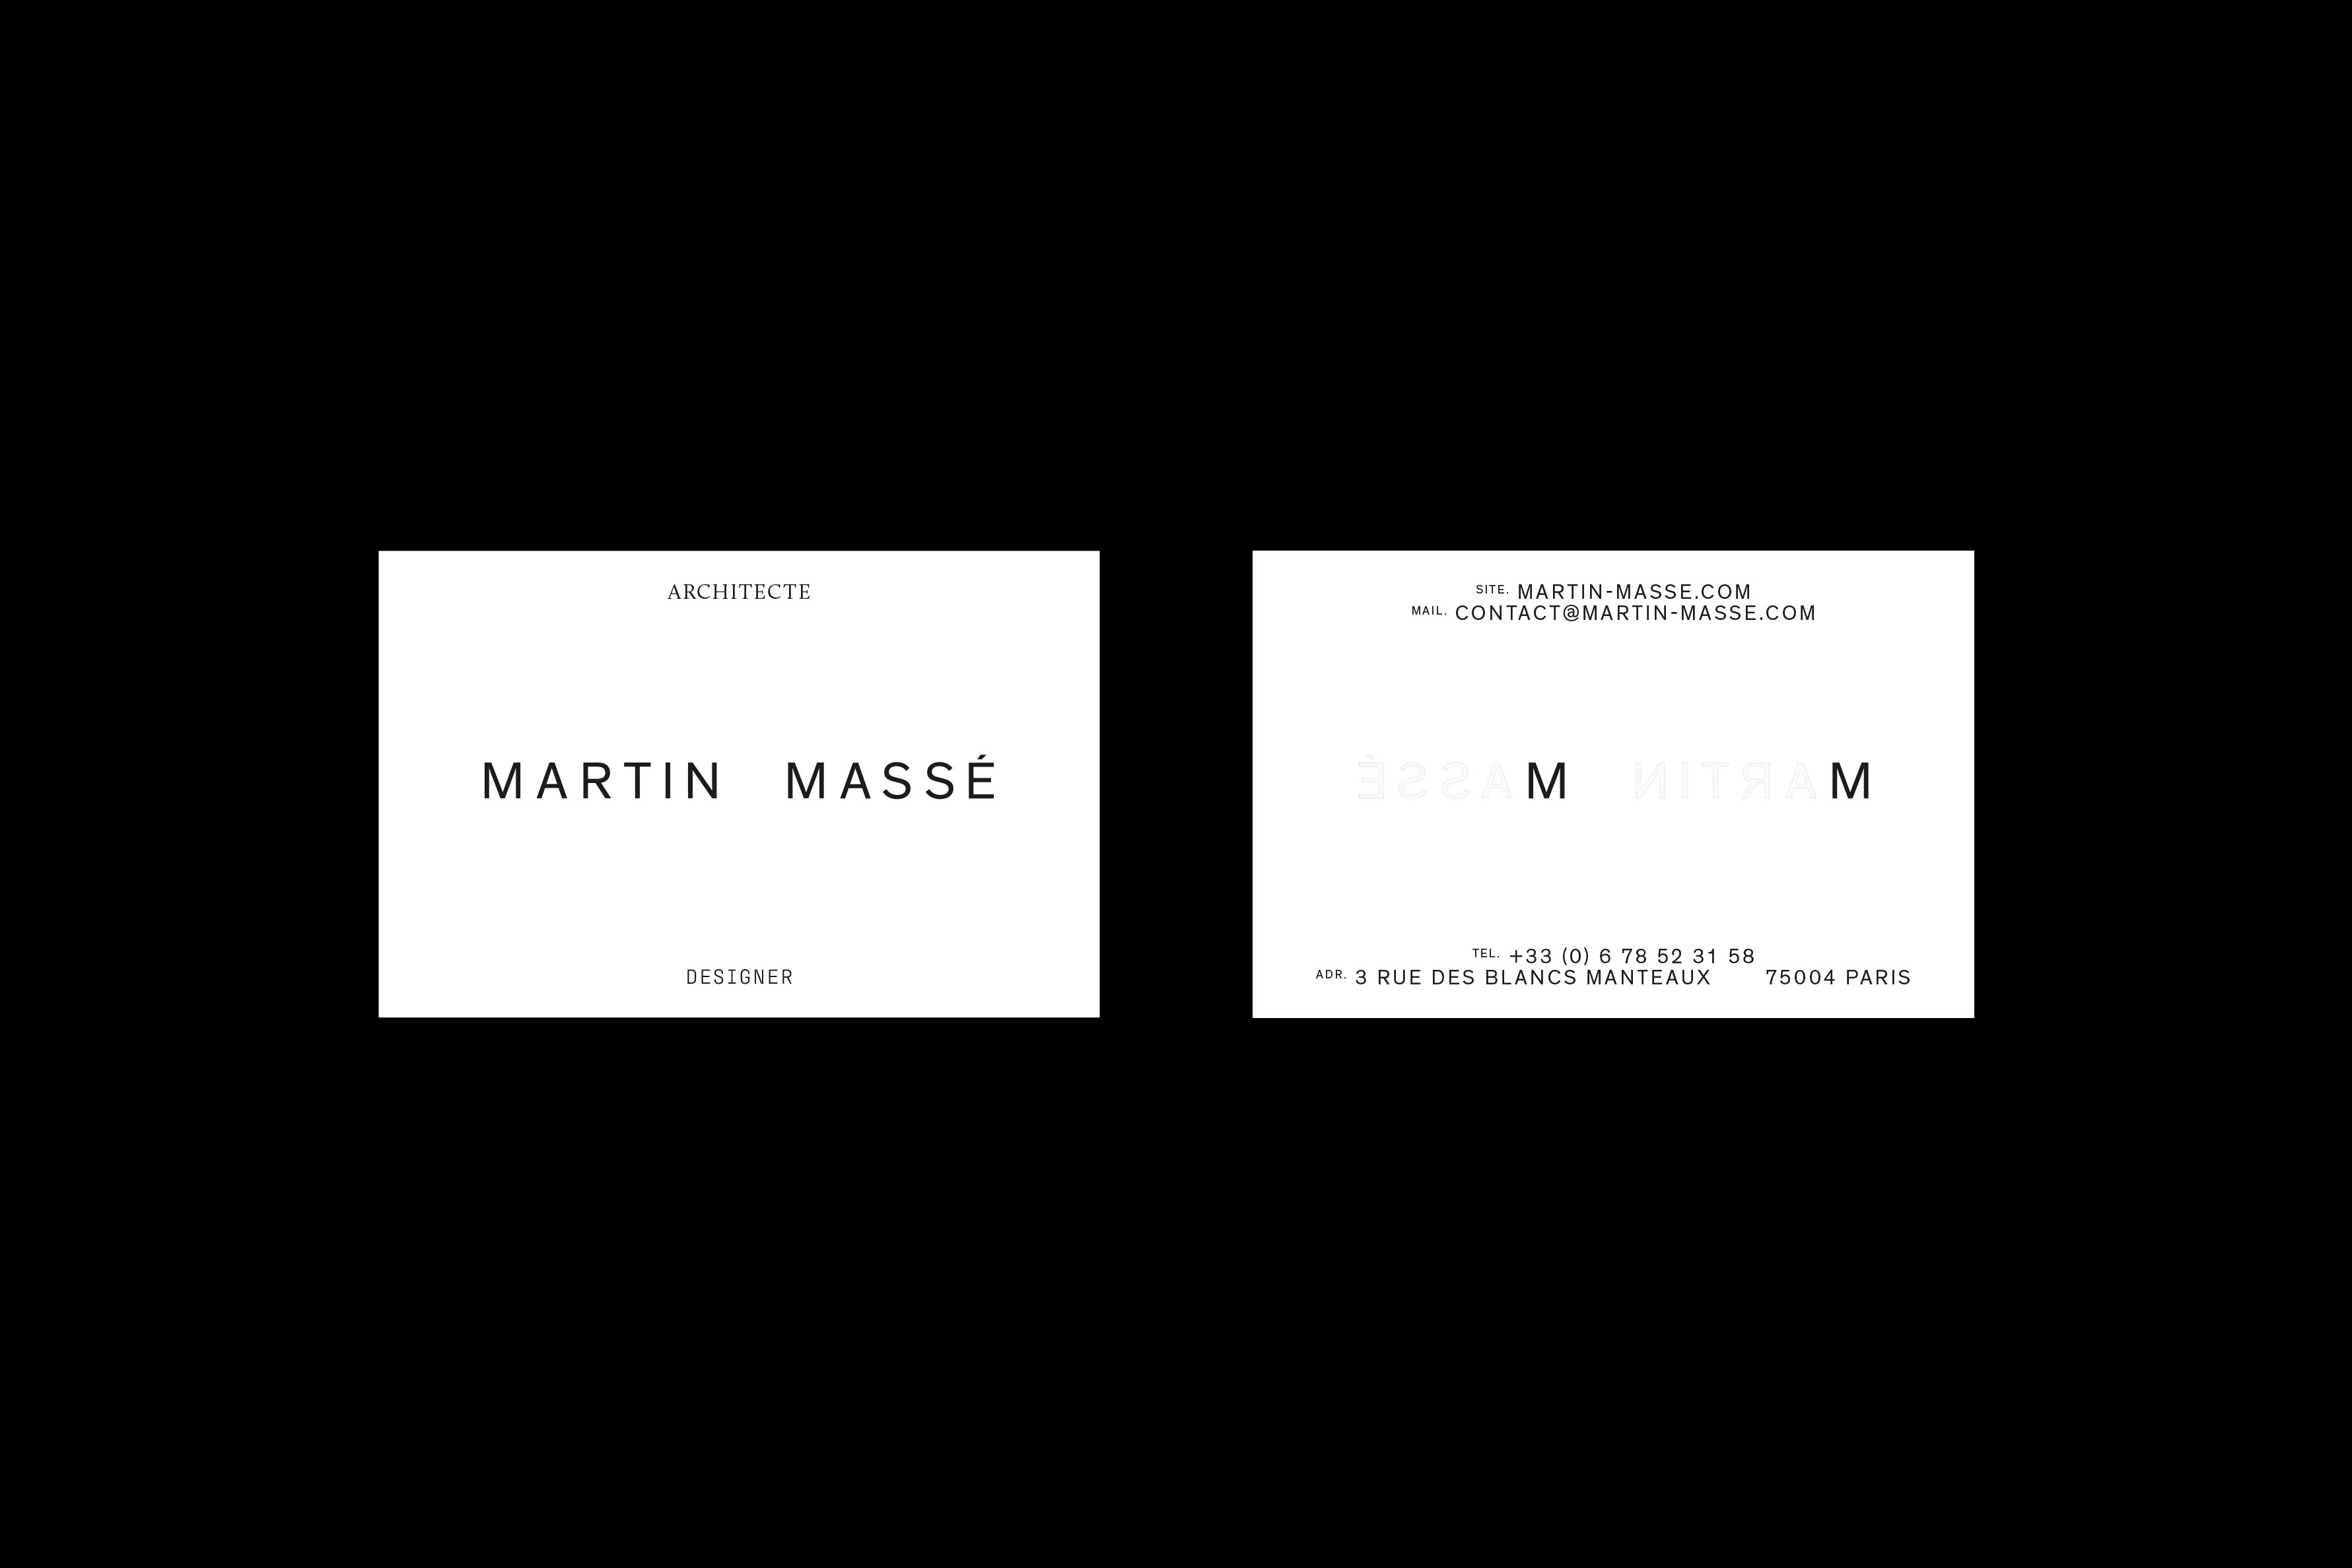 Studio Mitsu for Martin Masse Architect and designer. 
Graphic design, visual identity, business card, stationary, typography, design.